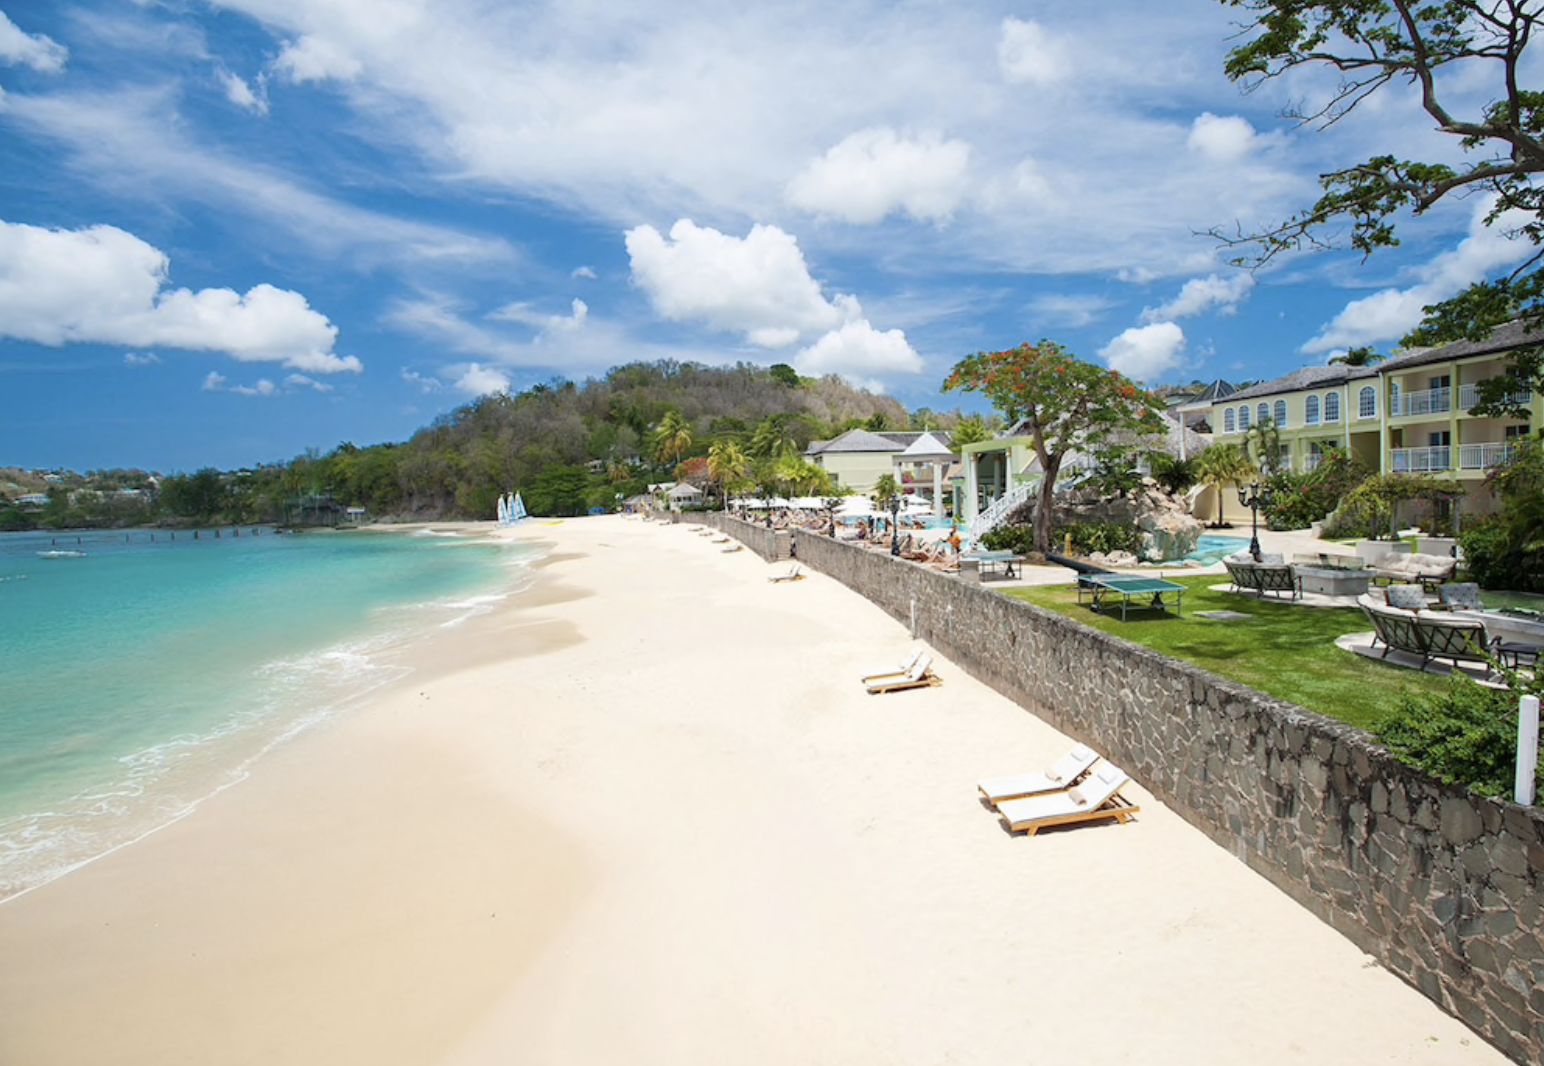 Sandals Regency La Toc Golf Resort & Spa Vacation Package